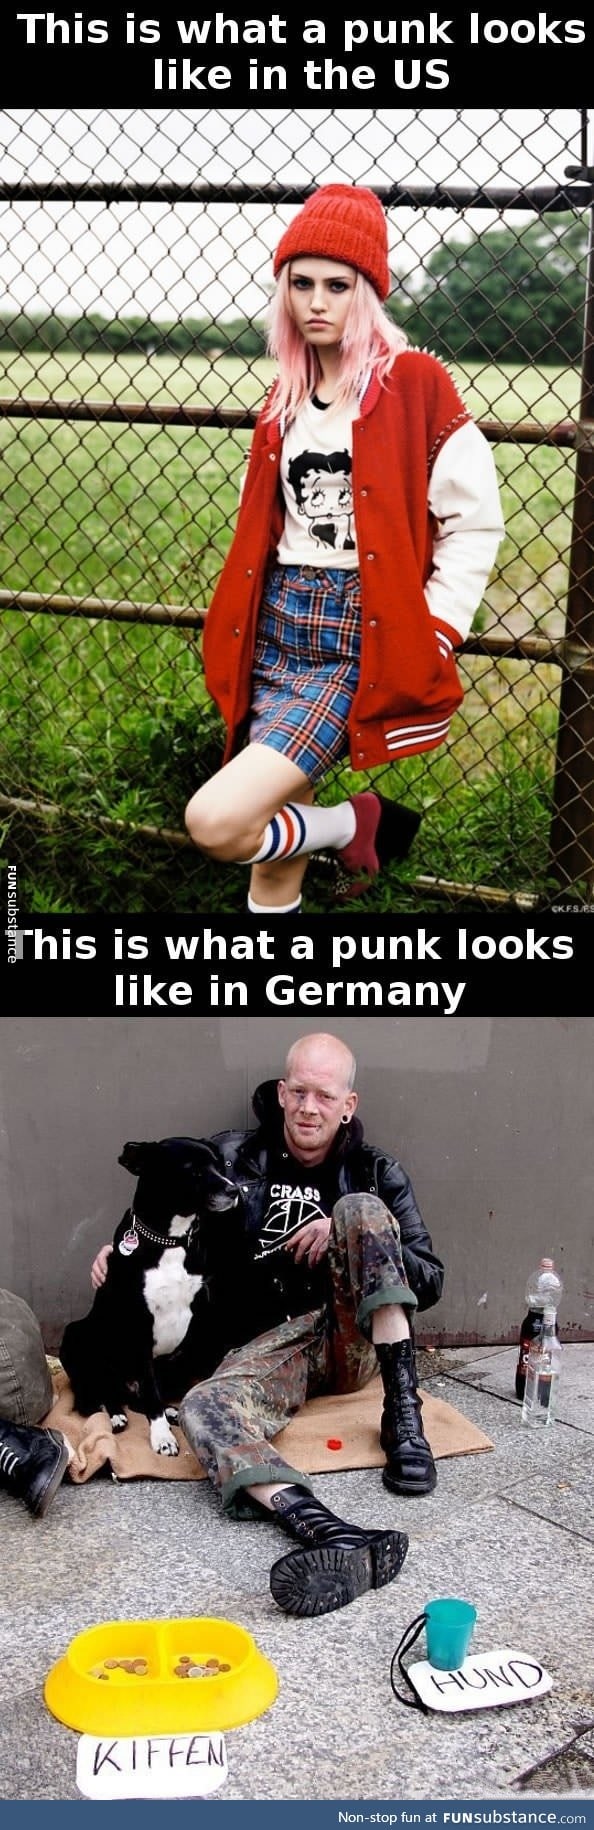 Different kind of punks